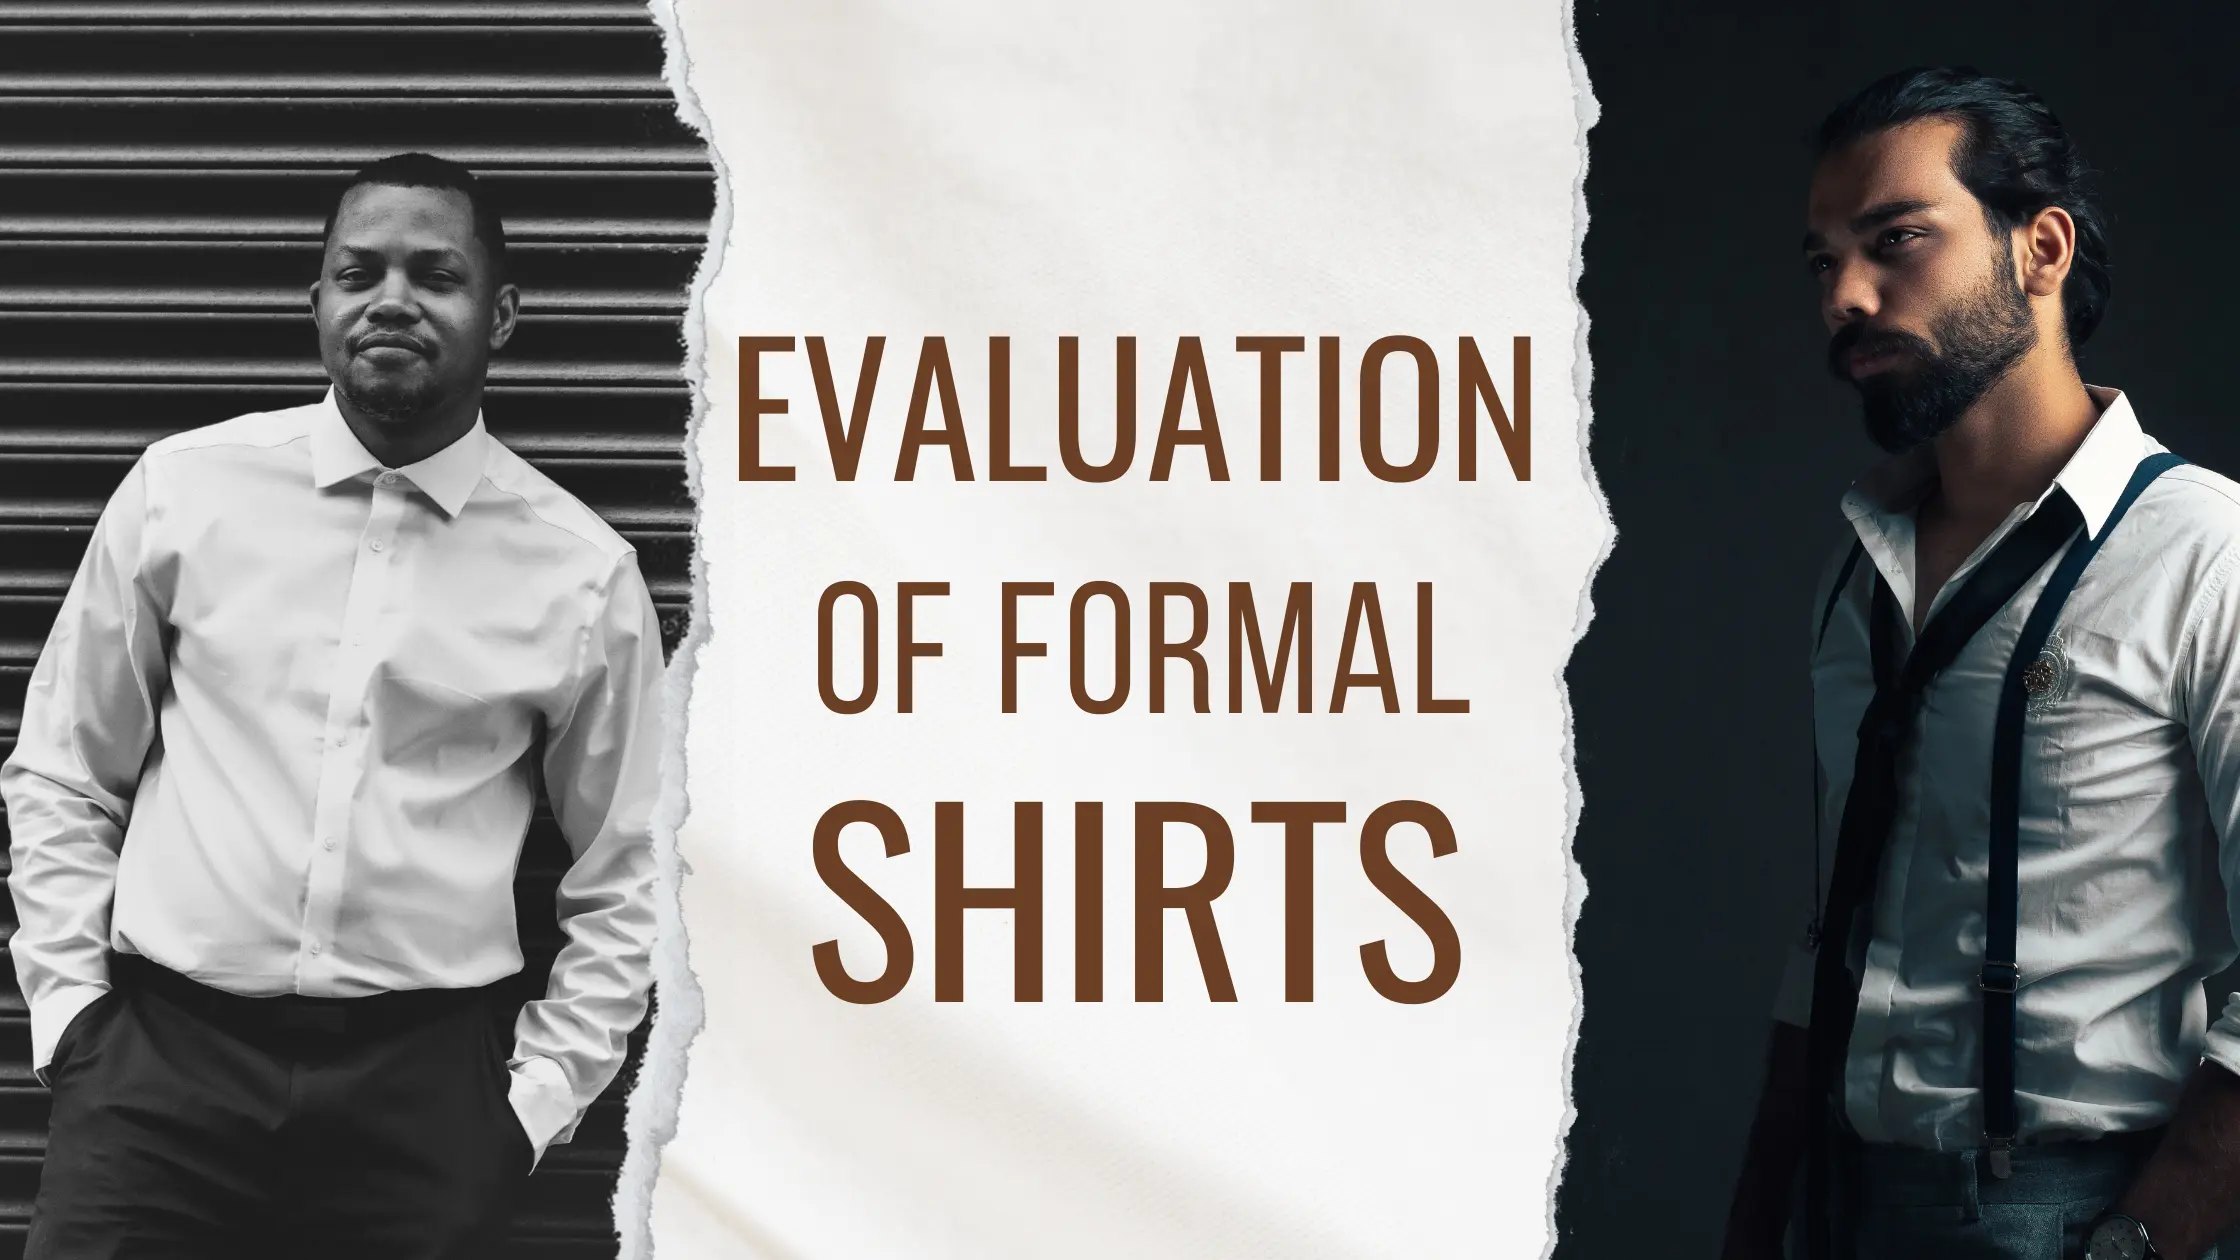 Evolution of formal shirts.